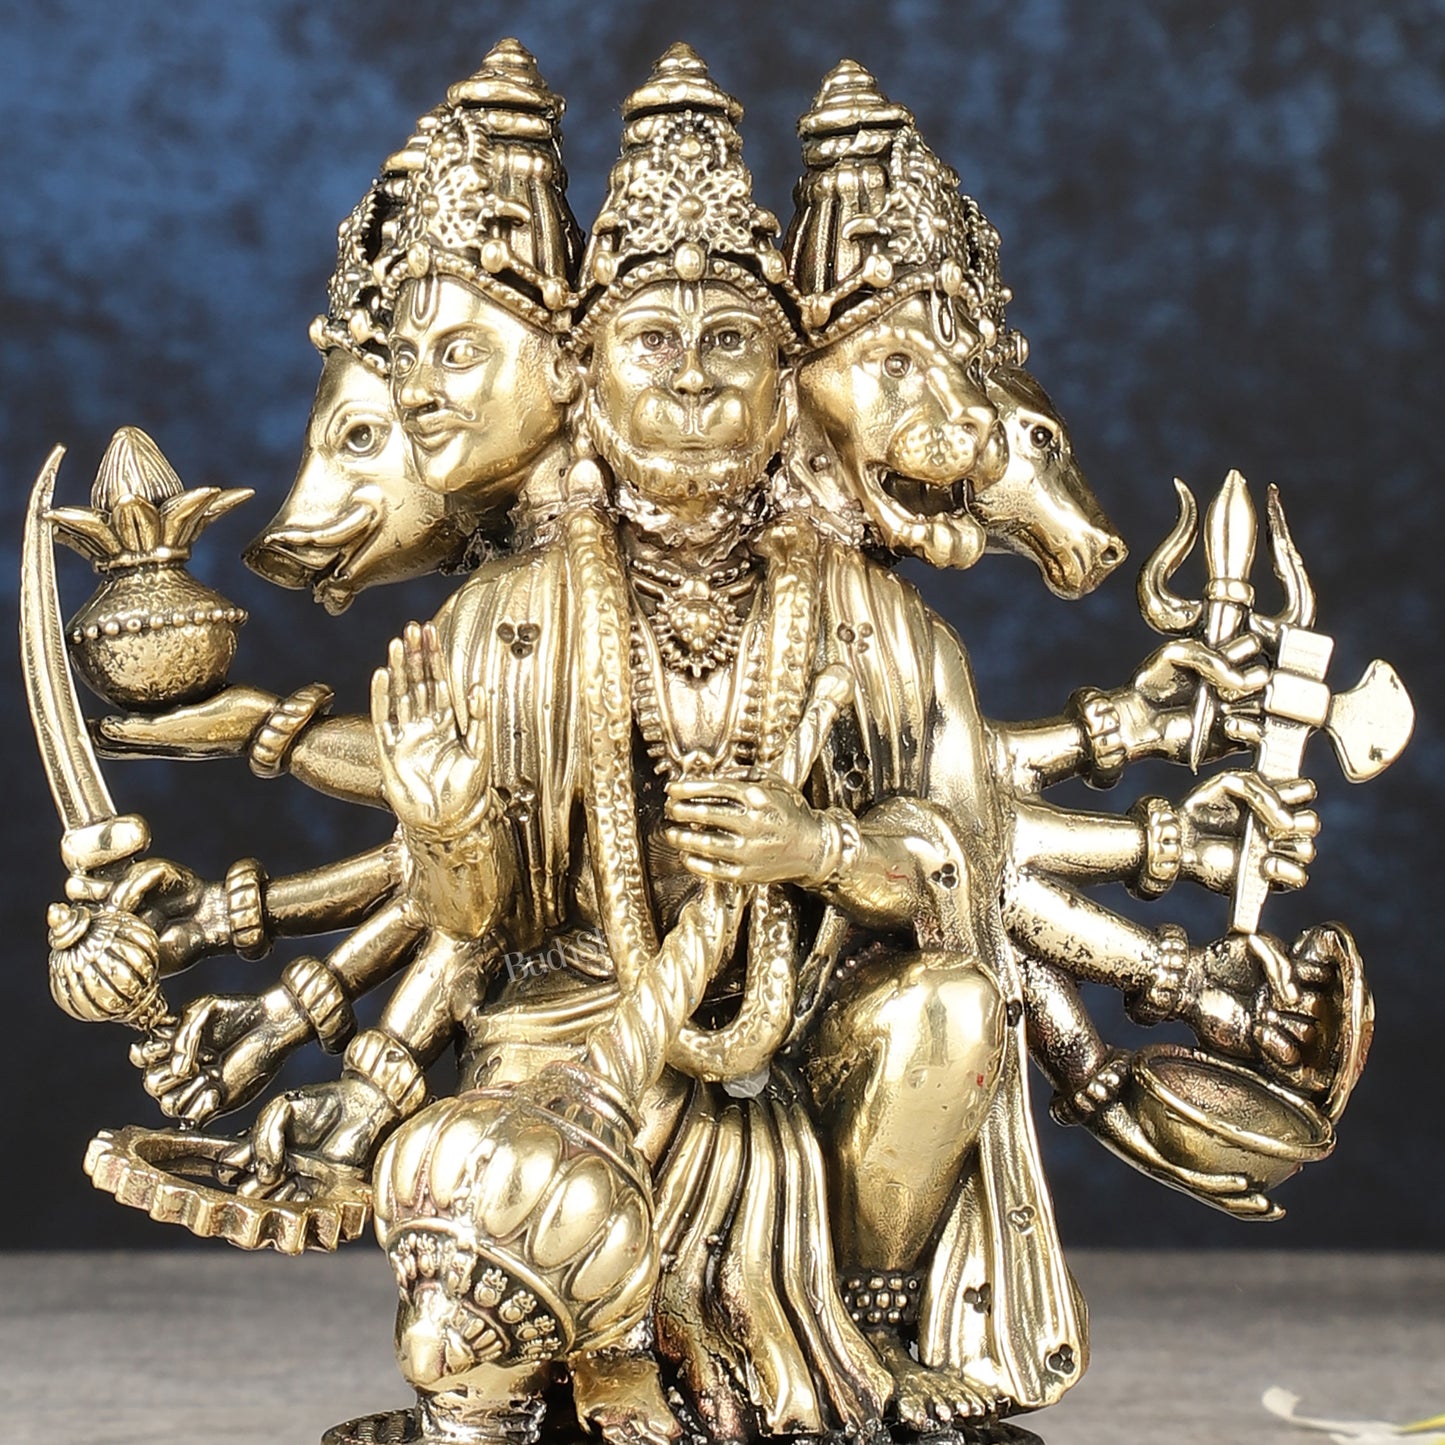 Intricately Handcrafted Brass Powerful Panchmukhi Hanuman Idol - 5.5-inch